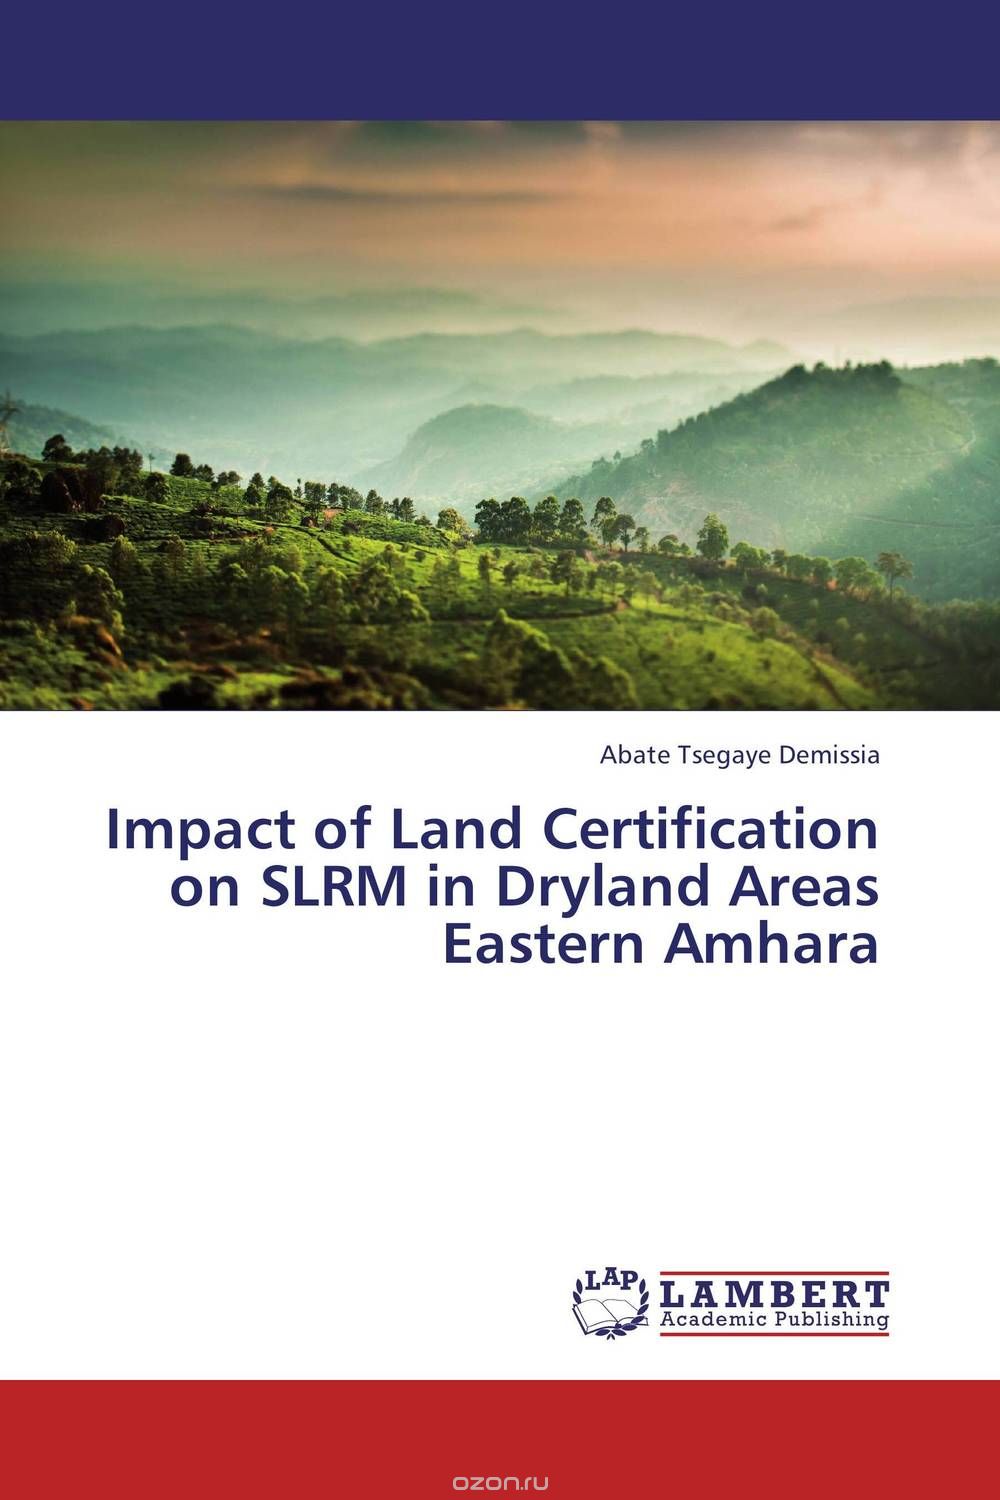 Скачать книгу "Impact of Land Certification on SLRM in Dryland Areas Eastern Amhara"